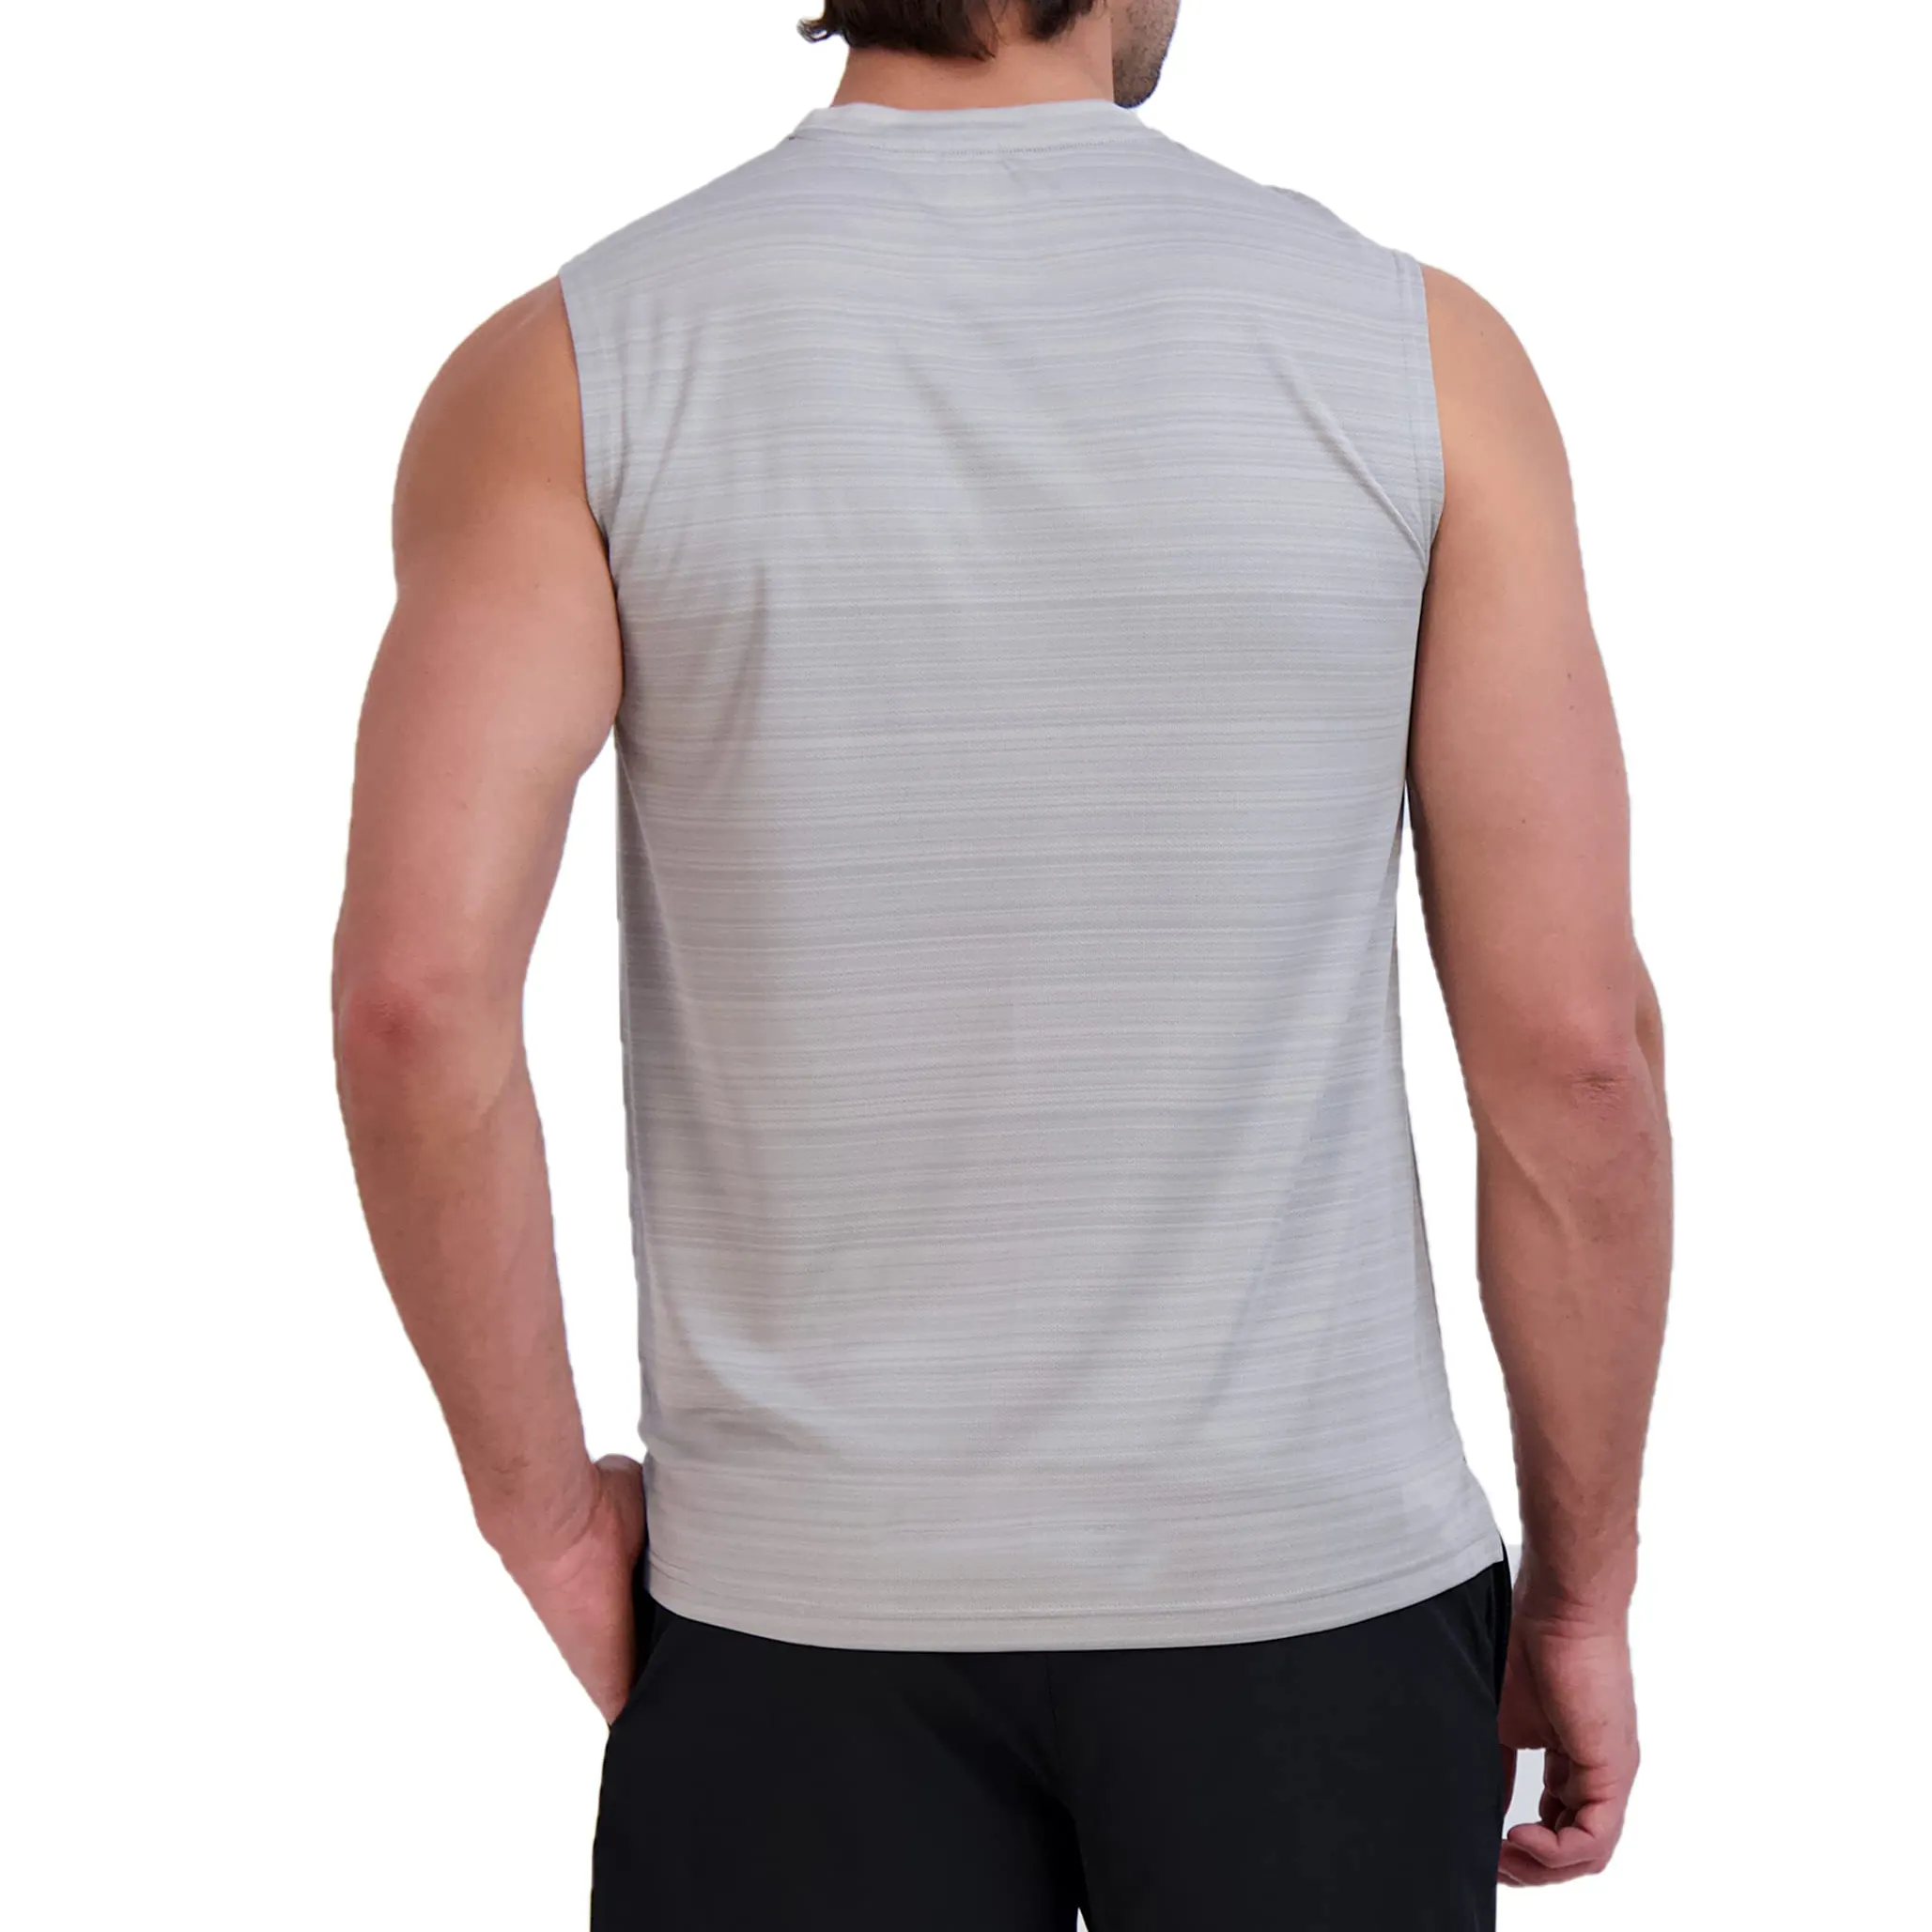 Good Selling Stringer Tank Top Men'S Training Vests O-Neck Sleeveless T Shirt Athletic Tank Top